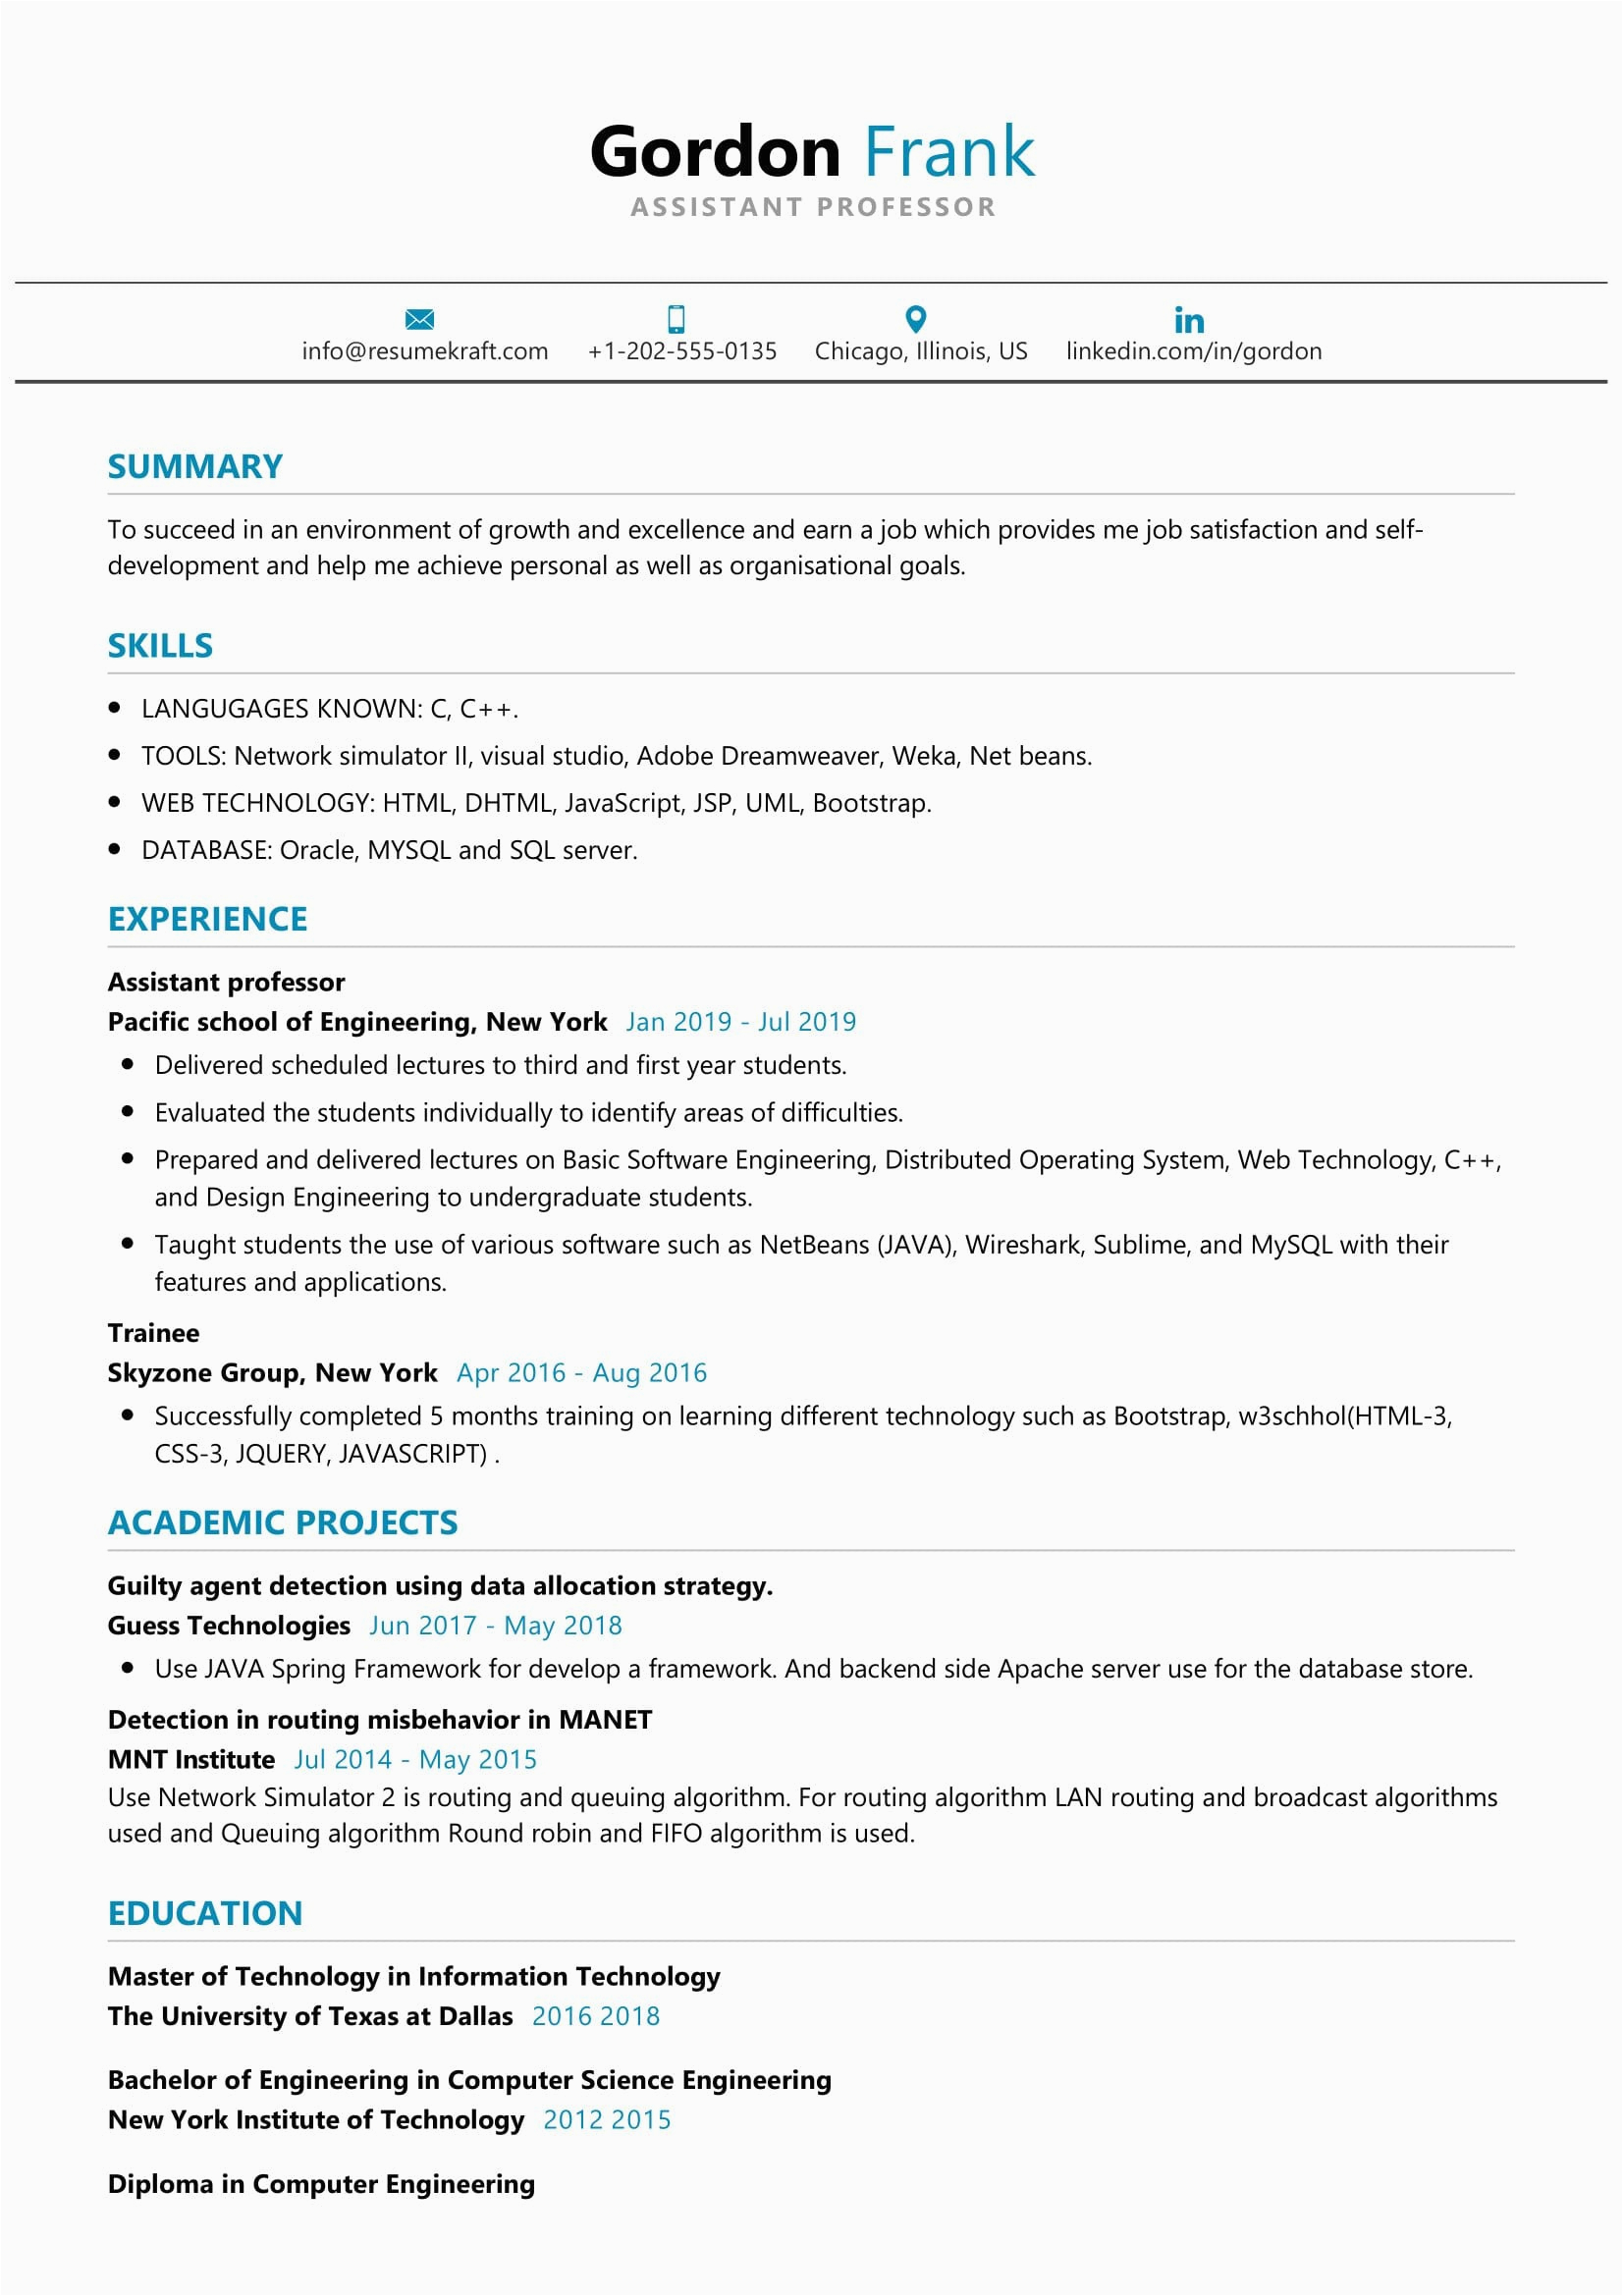 Sample Resume for Experienced assistant Professor In Engineering College assistant Professor Resume Sample Resumekraft